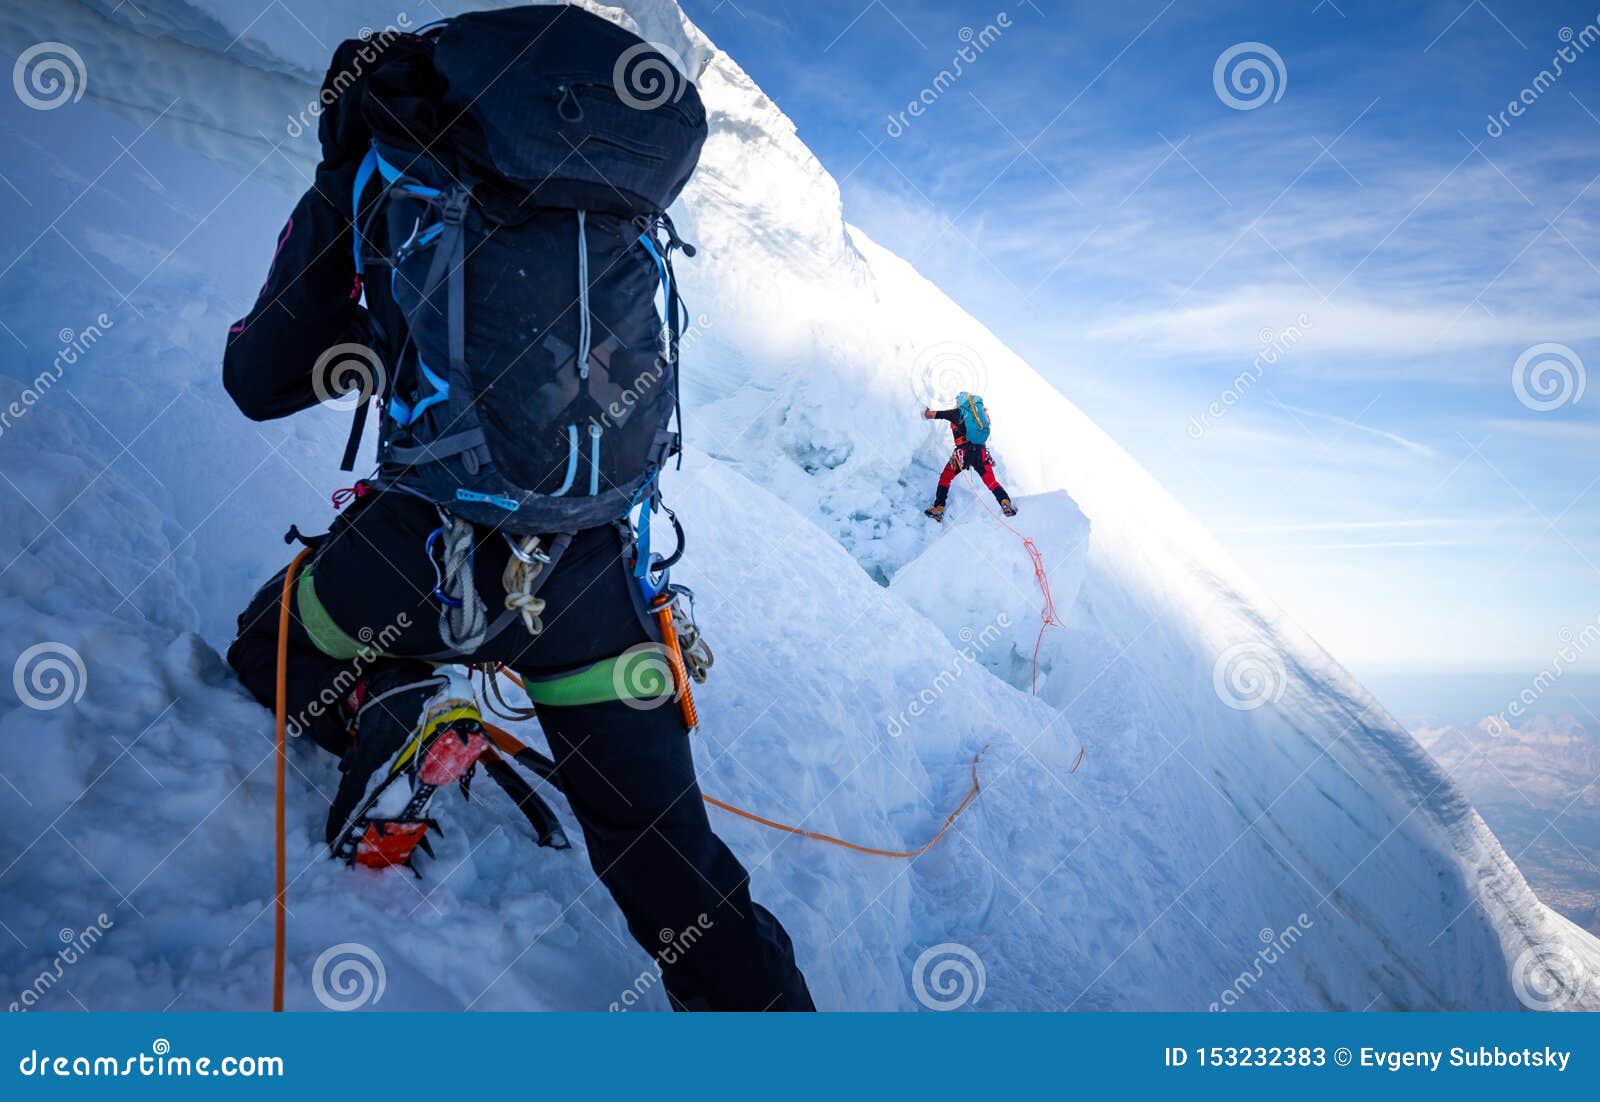 two mountaineers climb steep glacier ice crevasse extreme sports, mont blanc du tacul mountain, chamonix france travel, europe